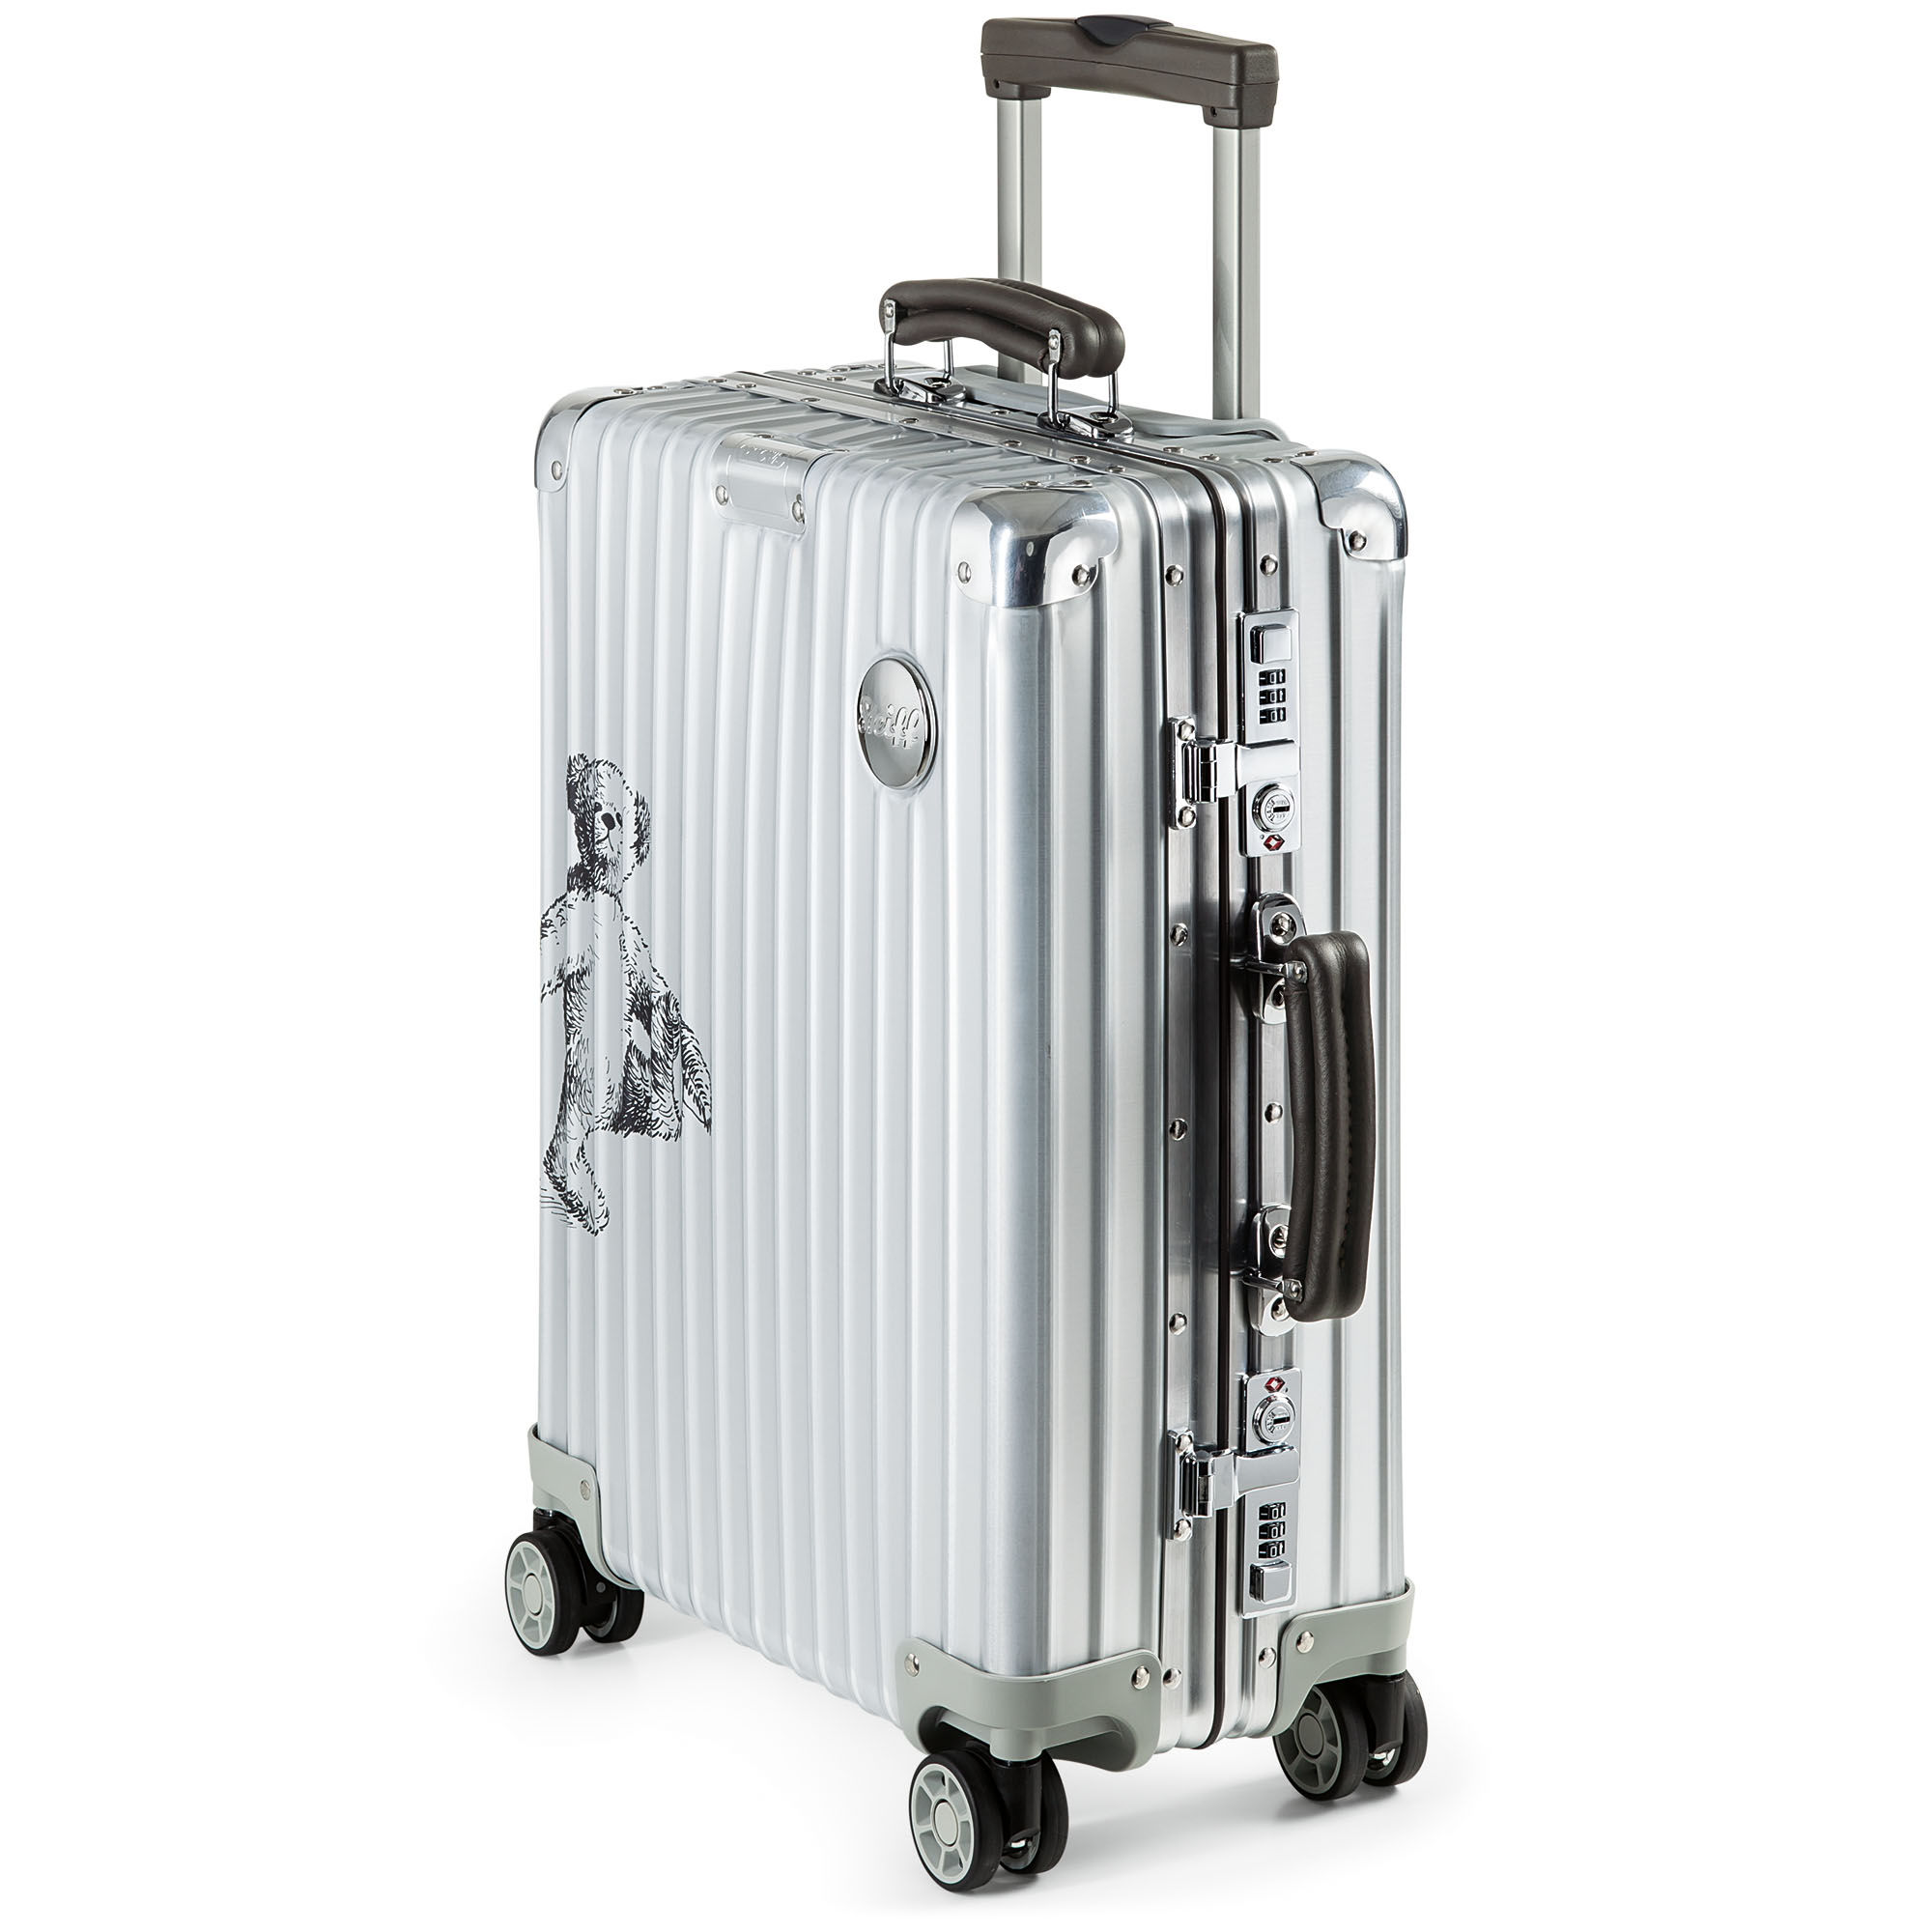 RIMOWA suitcase with Steiff design